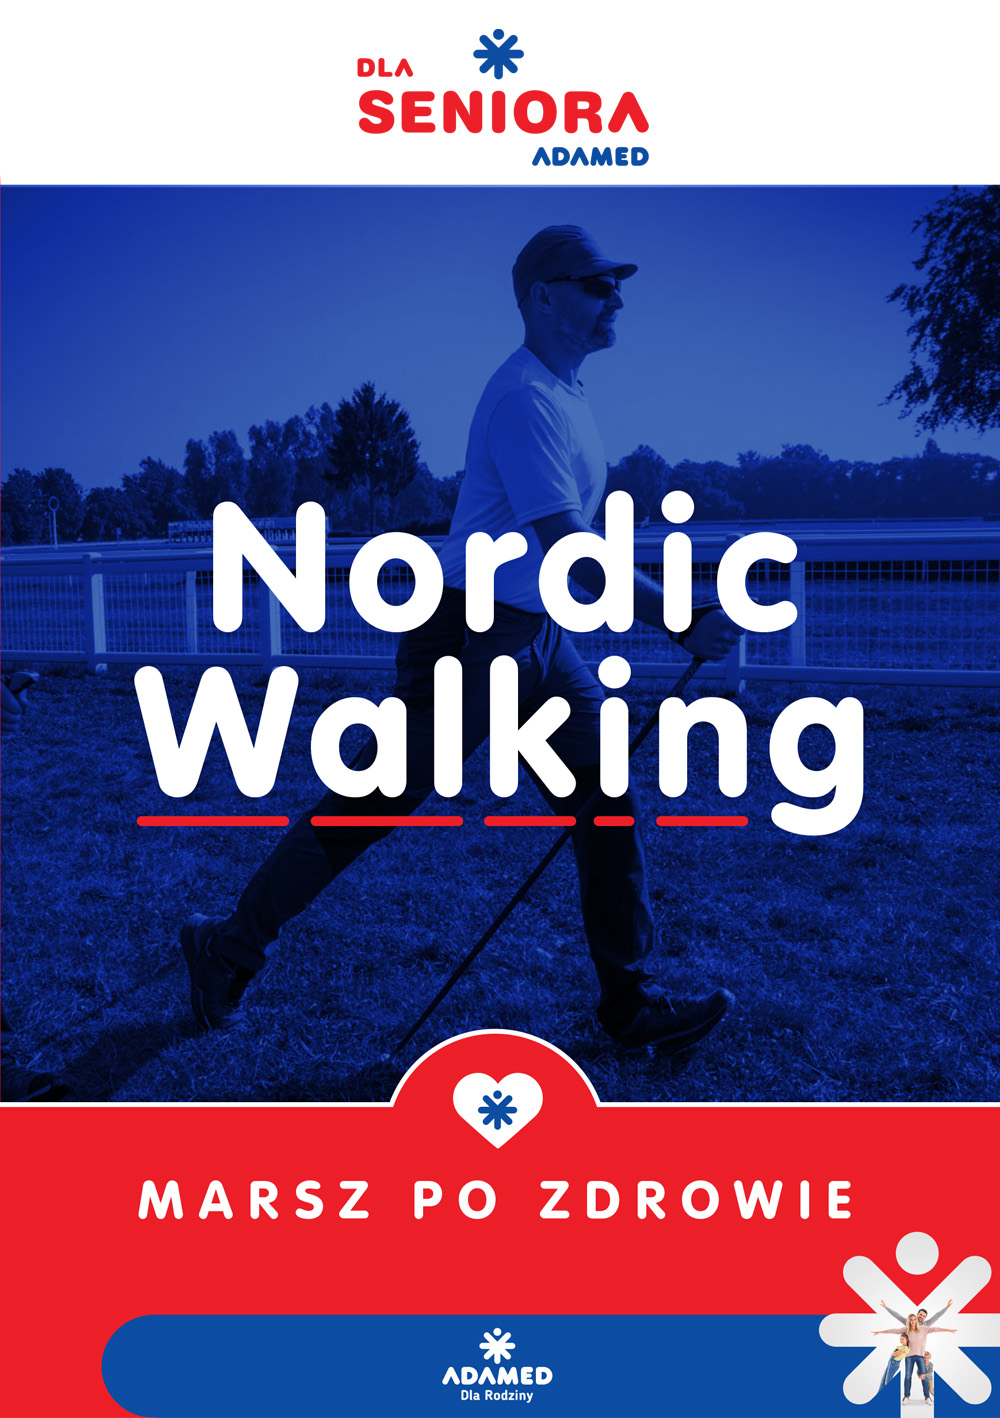 Adamed_dla_Seniora_Nordic_Walking